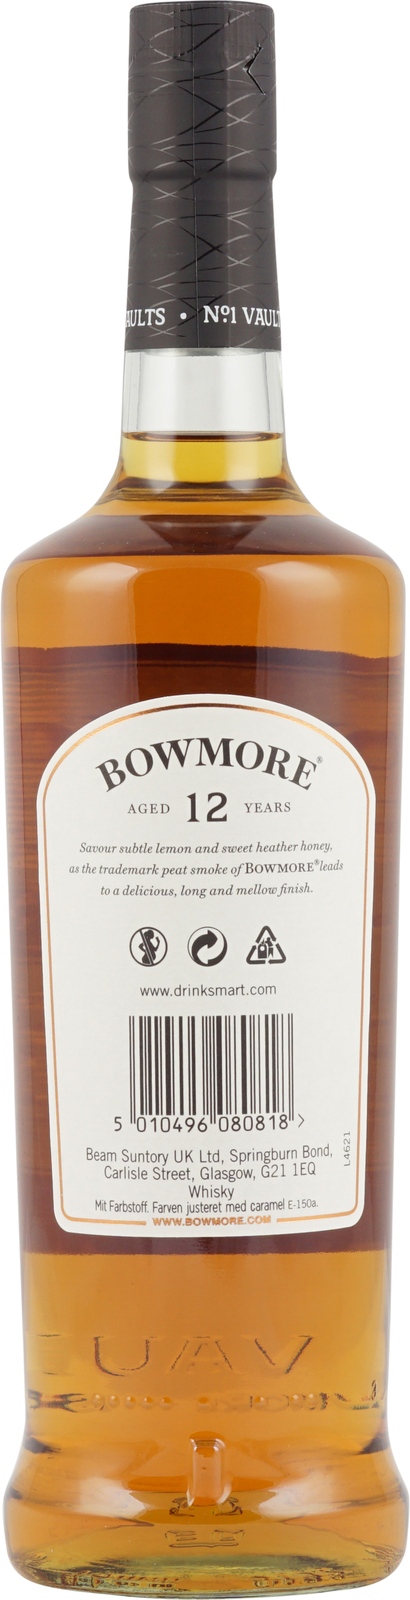 Bowmore Islay Single Malt Whisky (12 Jahre) 0,7 Liter i | Whisky